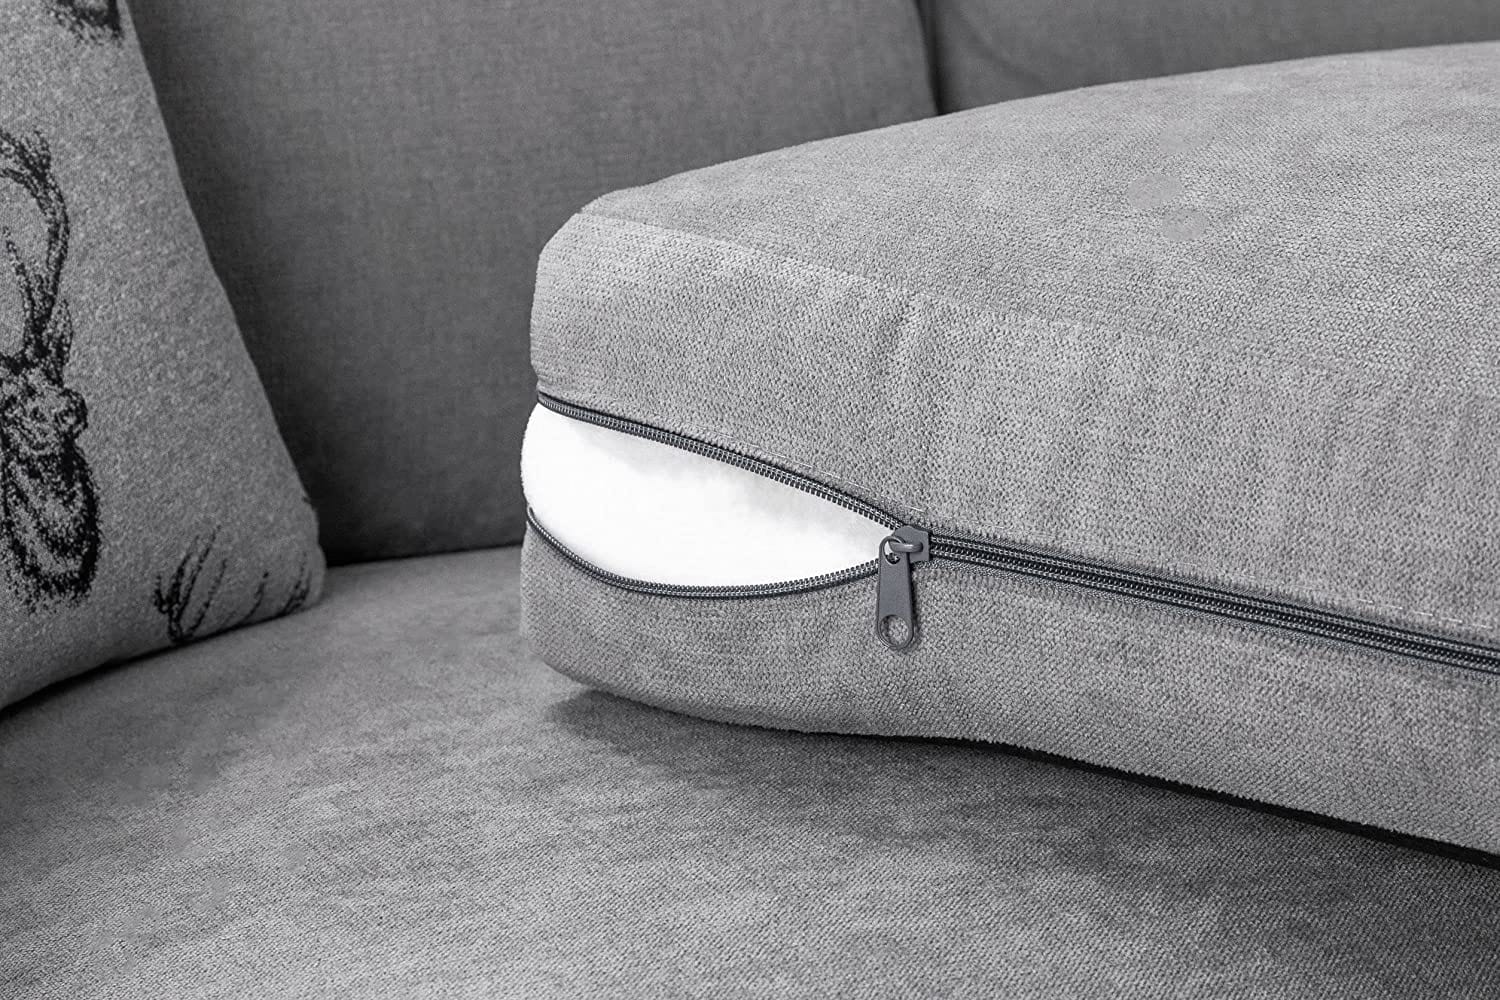 Sofa Verona Fabric Corner Sofa -Grey, Armchair)